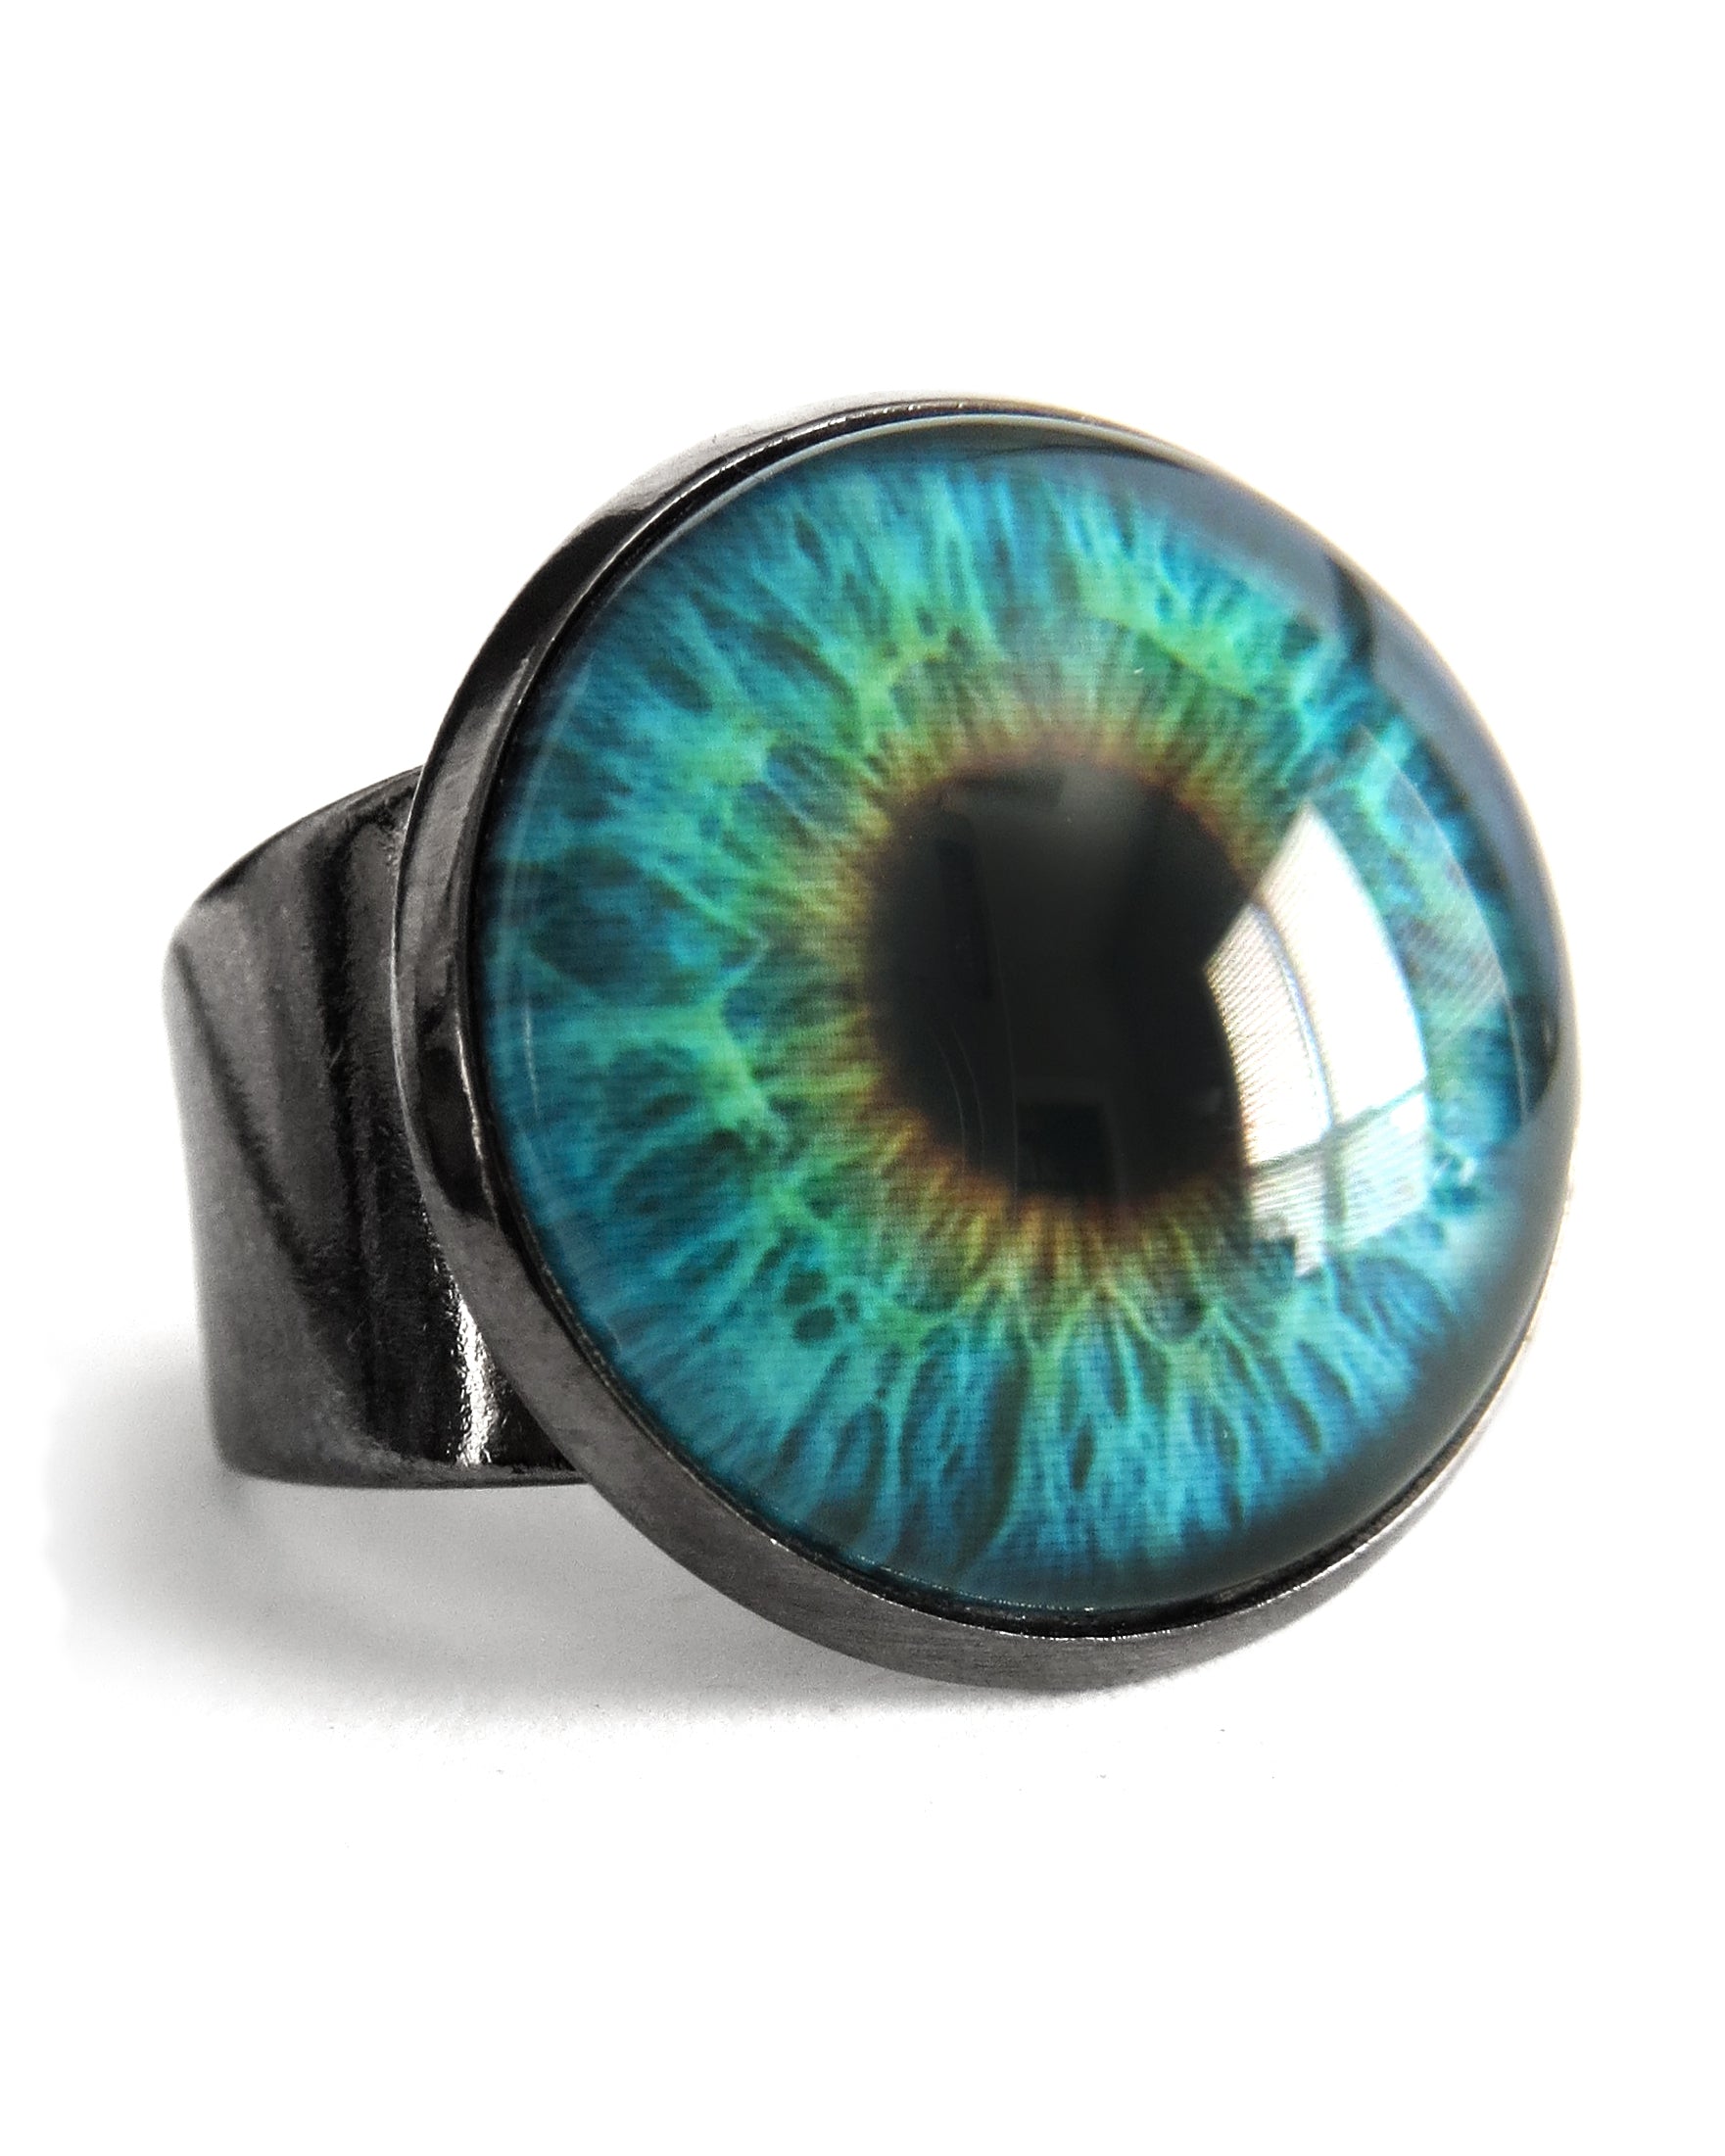 Gothic Halloween Eyeball Ring in Glossy Aqua - Two Sizes